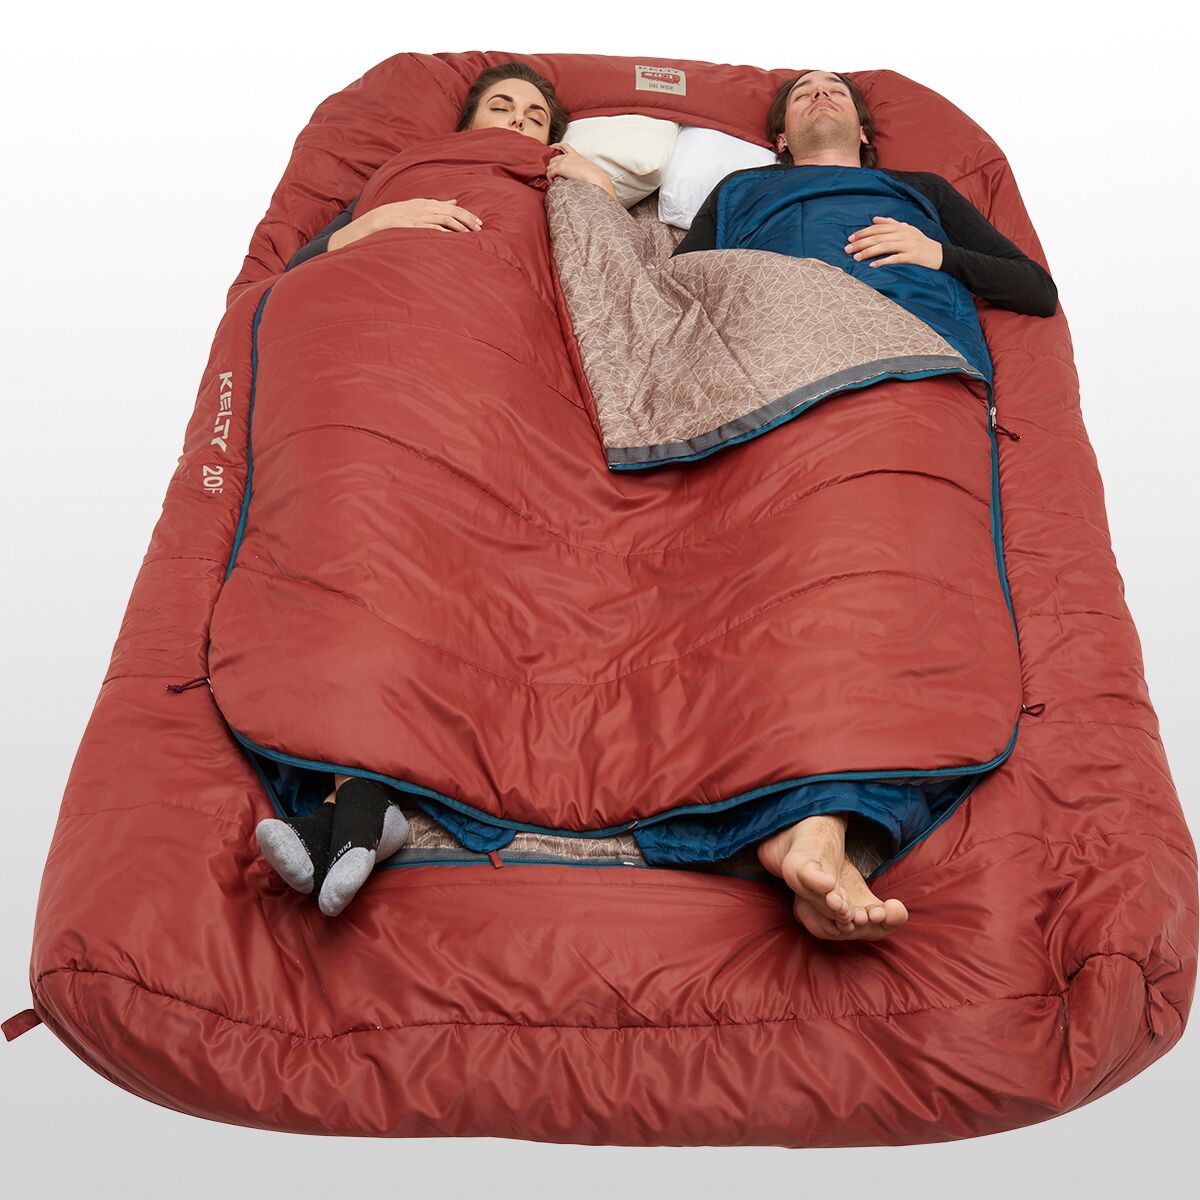 Kelty TruComfort Doublewide Tru Comfort Double Sleeping Bag 20* For Two NEW 